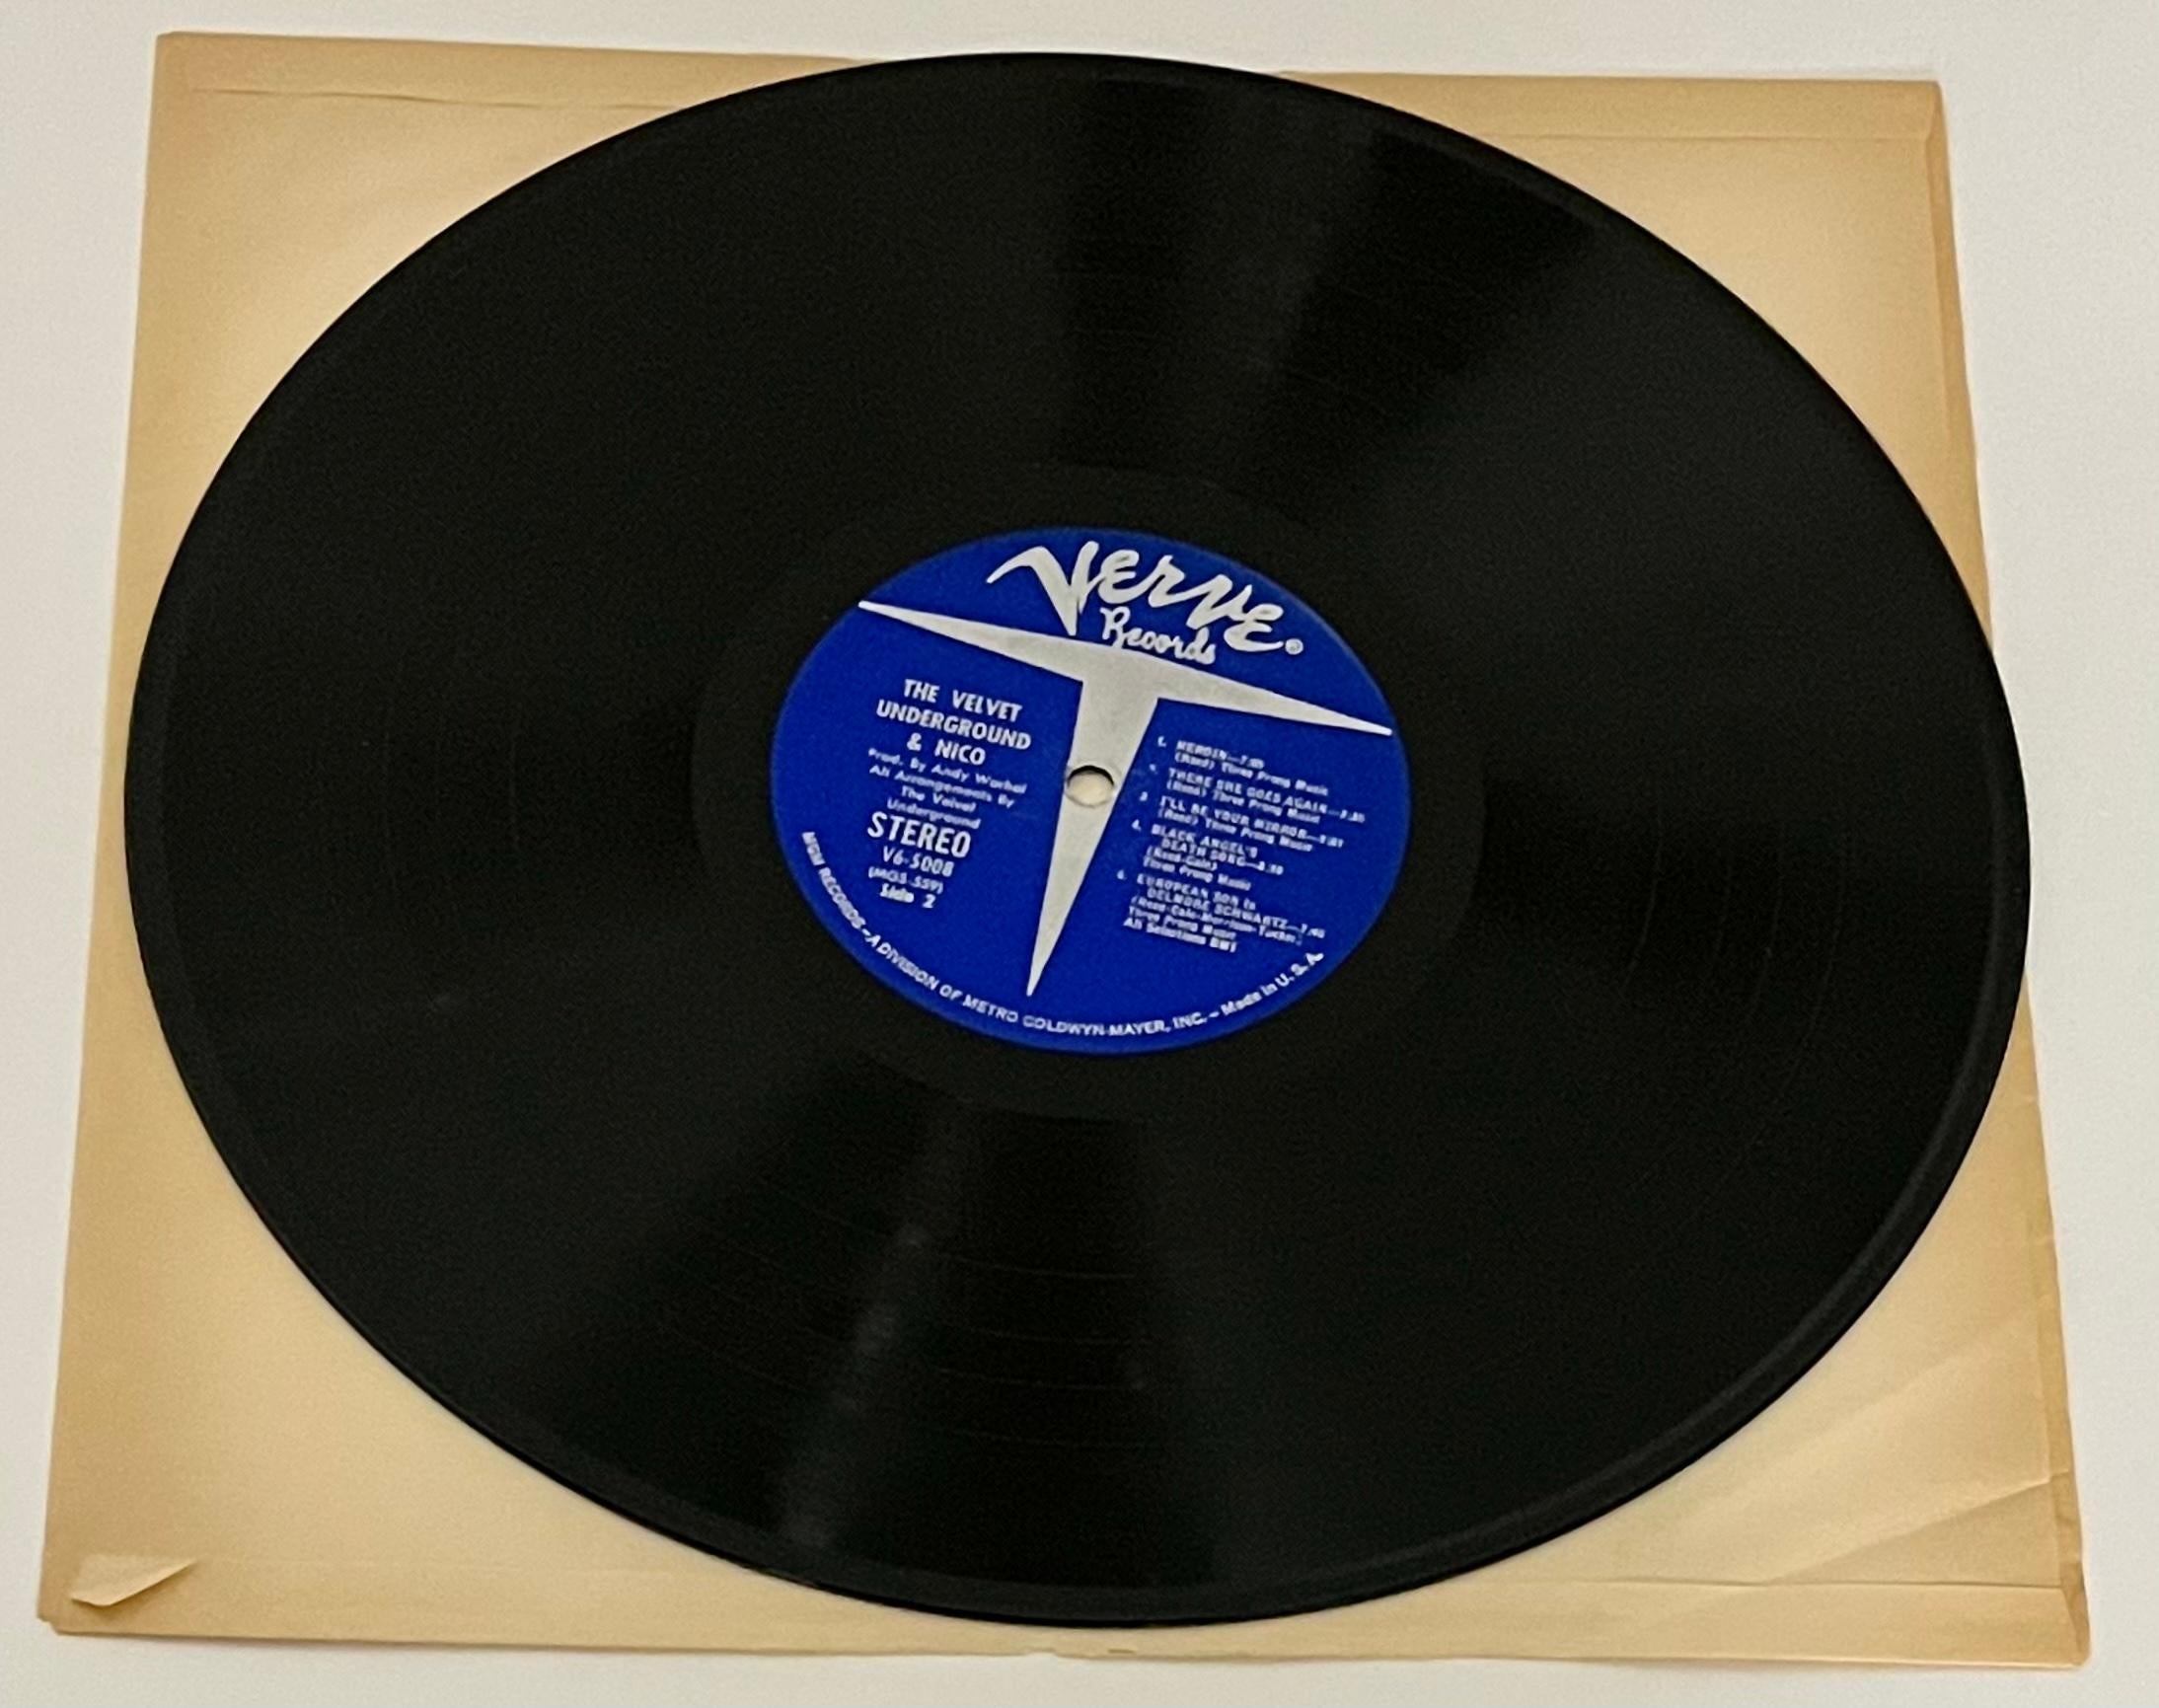 Andy Warhol Banana: Nico & The Velvet Underground vinyl record (1967 original)  3